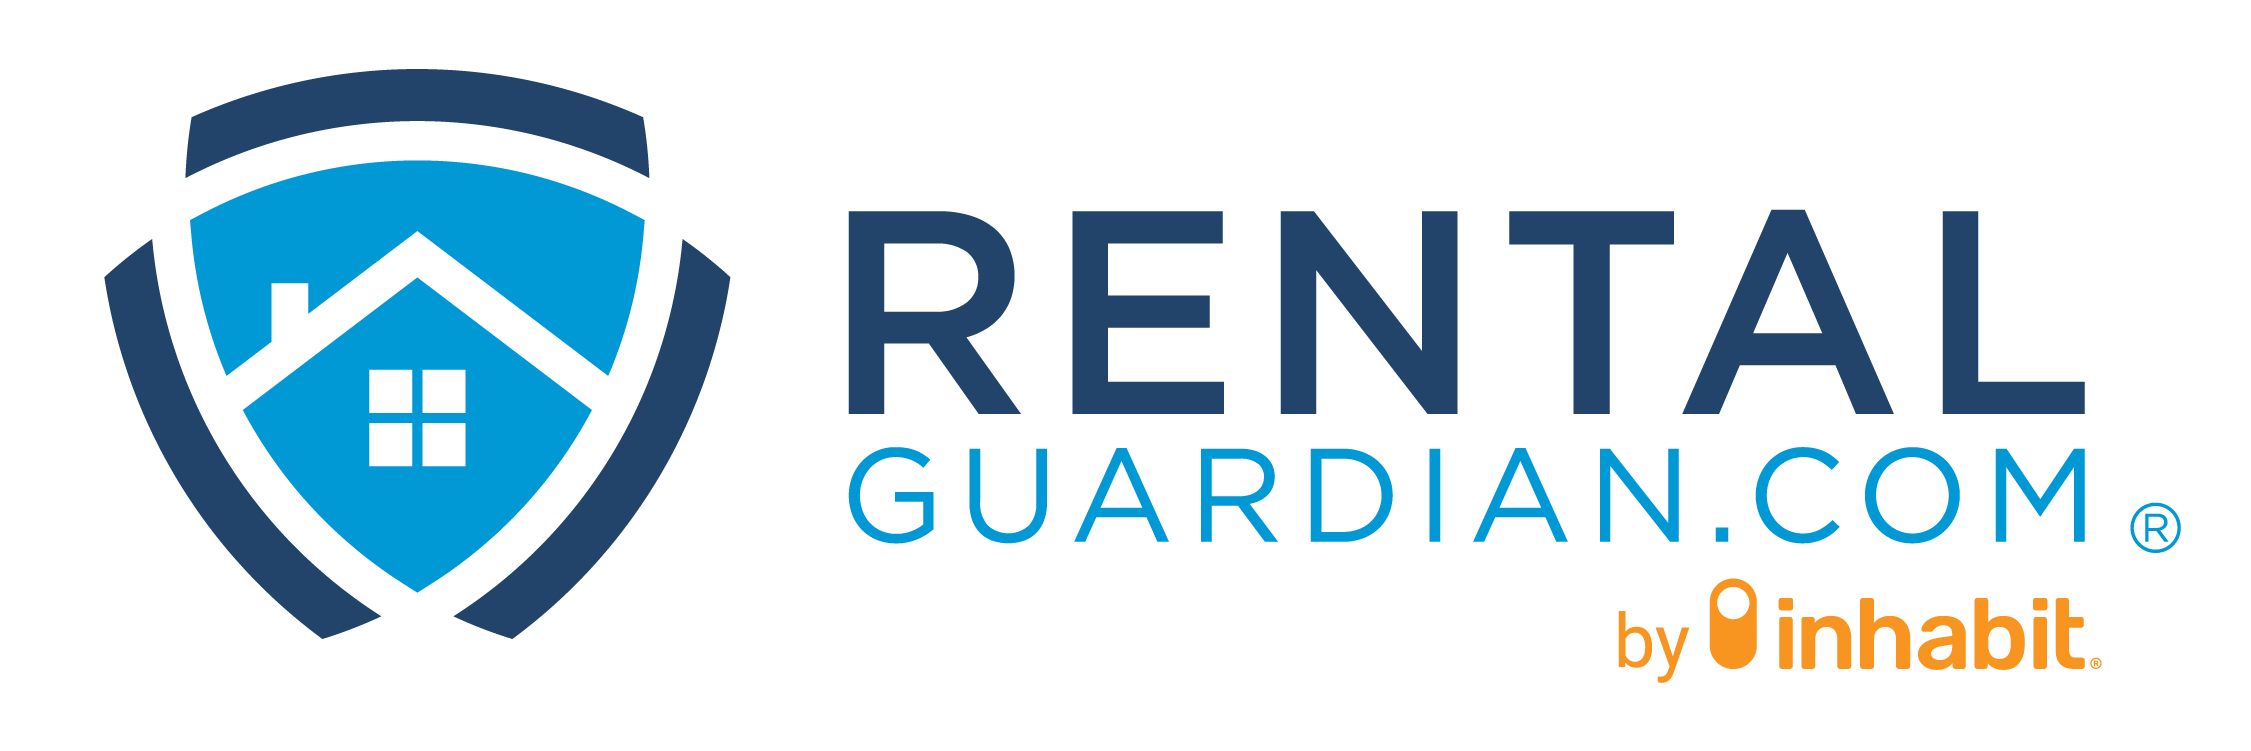 Rental Guardian